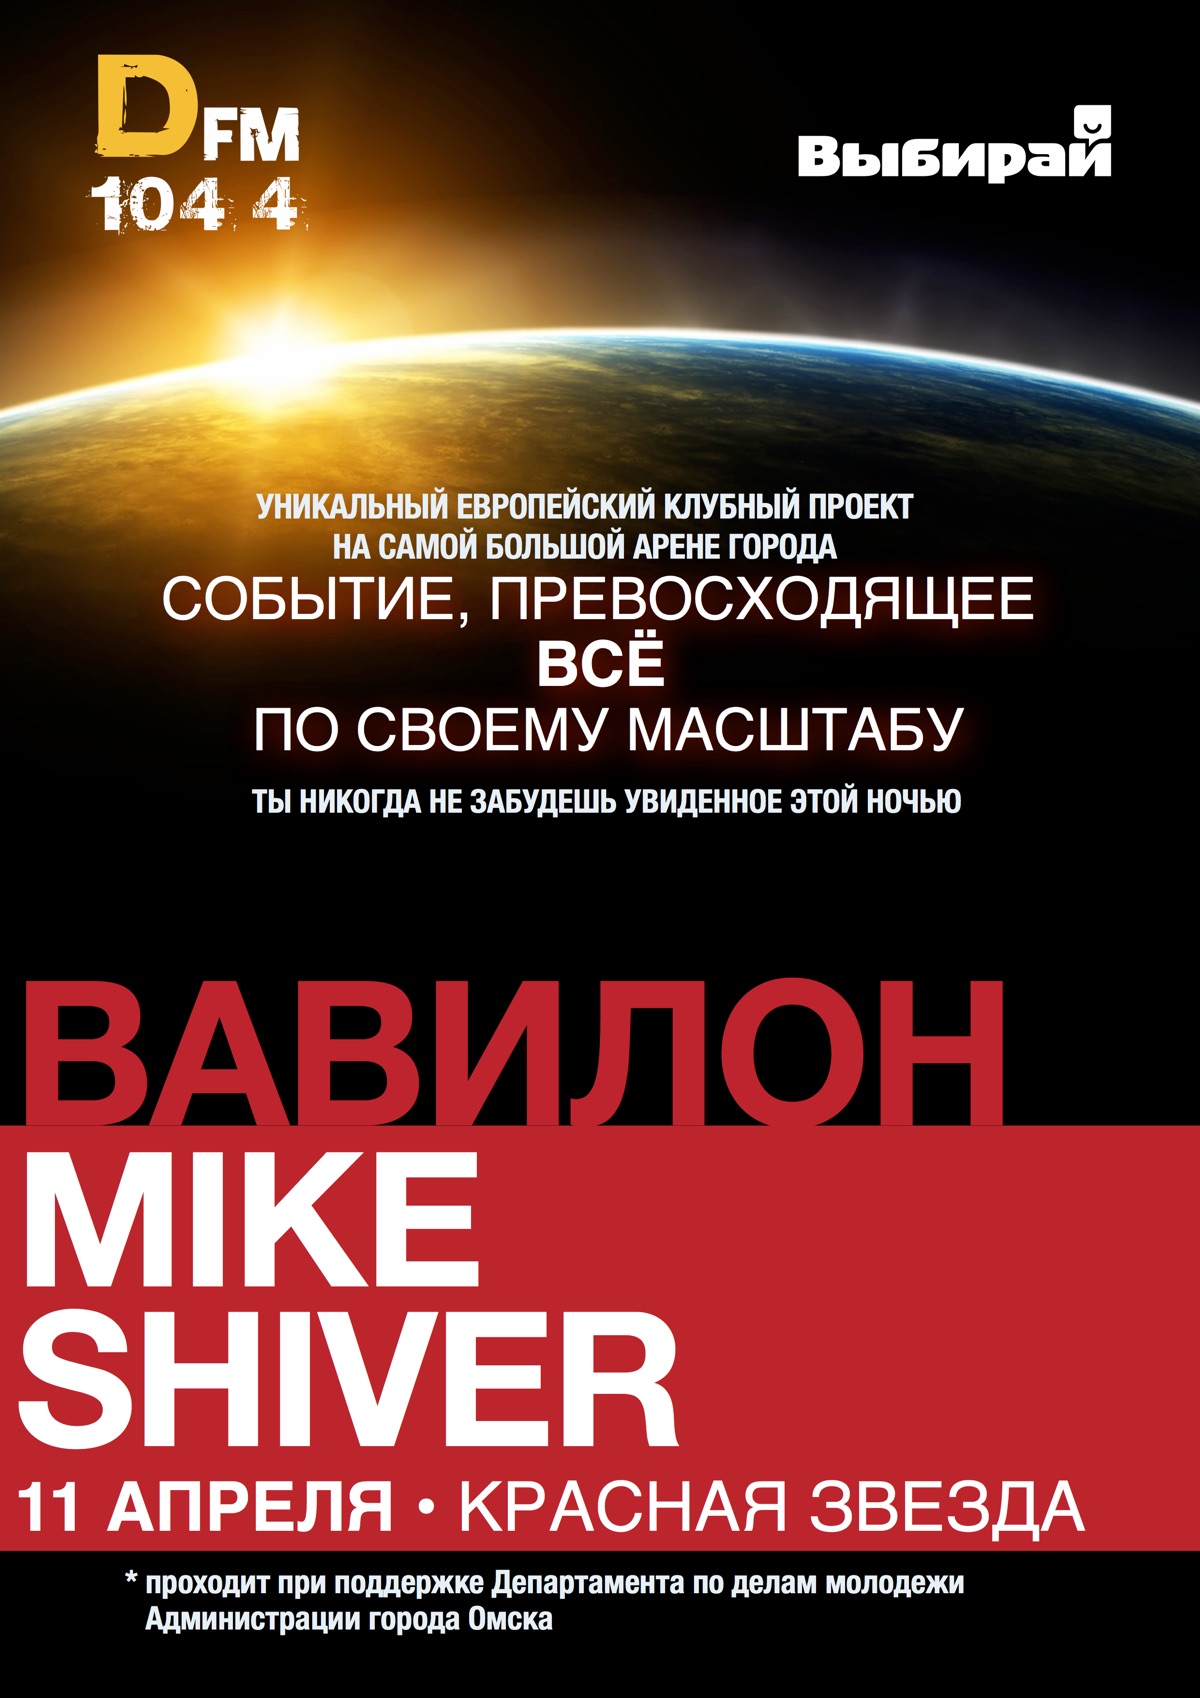 Babylon: Mike Shiver flyer Mega-event at Red Star Stadium 11 aprill 2009 omsk Oleg Borisov Omsk Moscow Russia